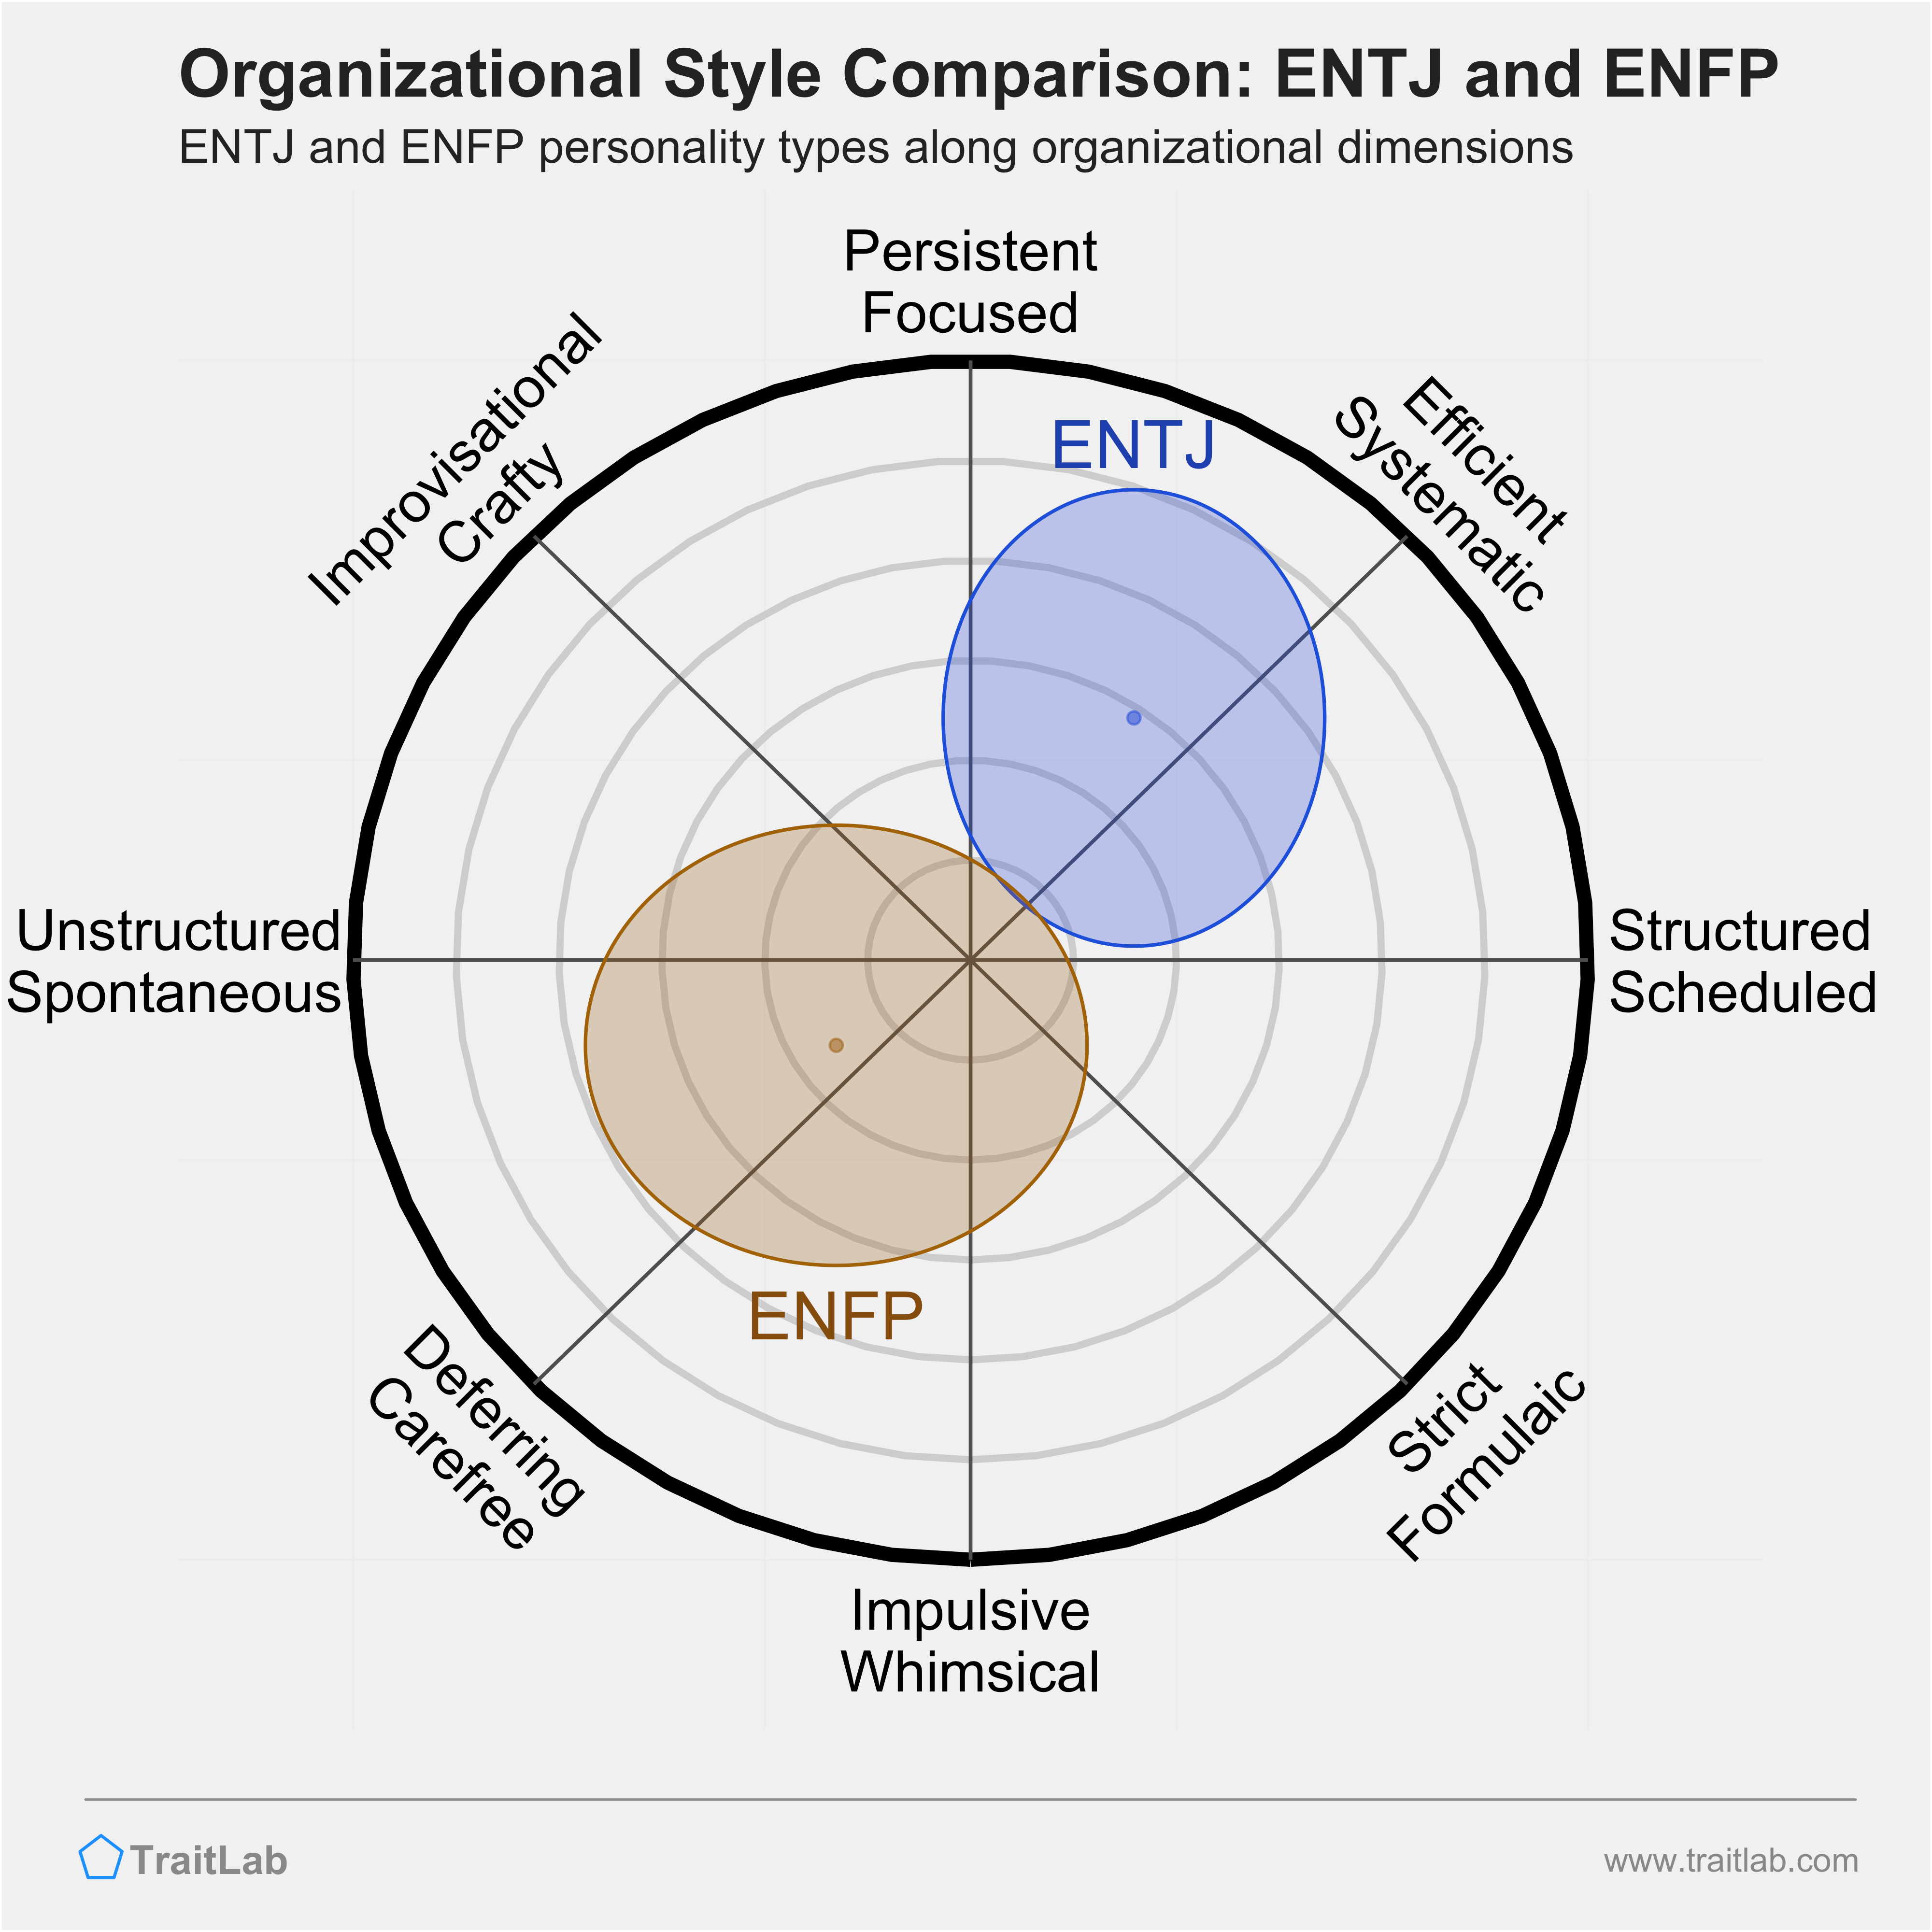 ENTJ and ENFP comparison across organizational dimensions